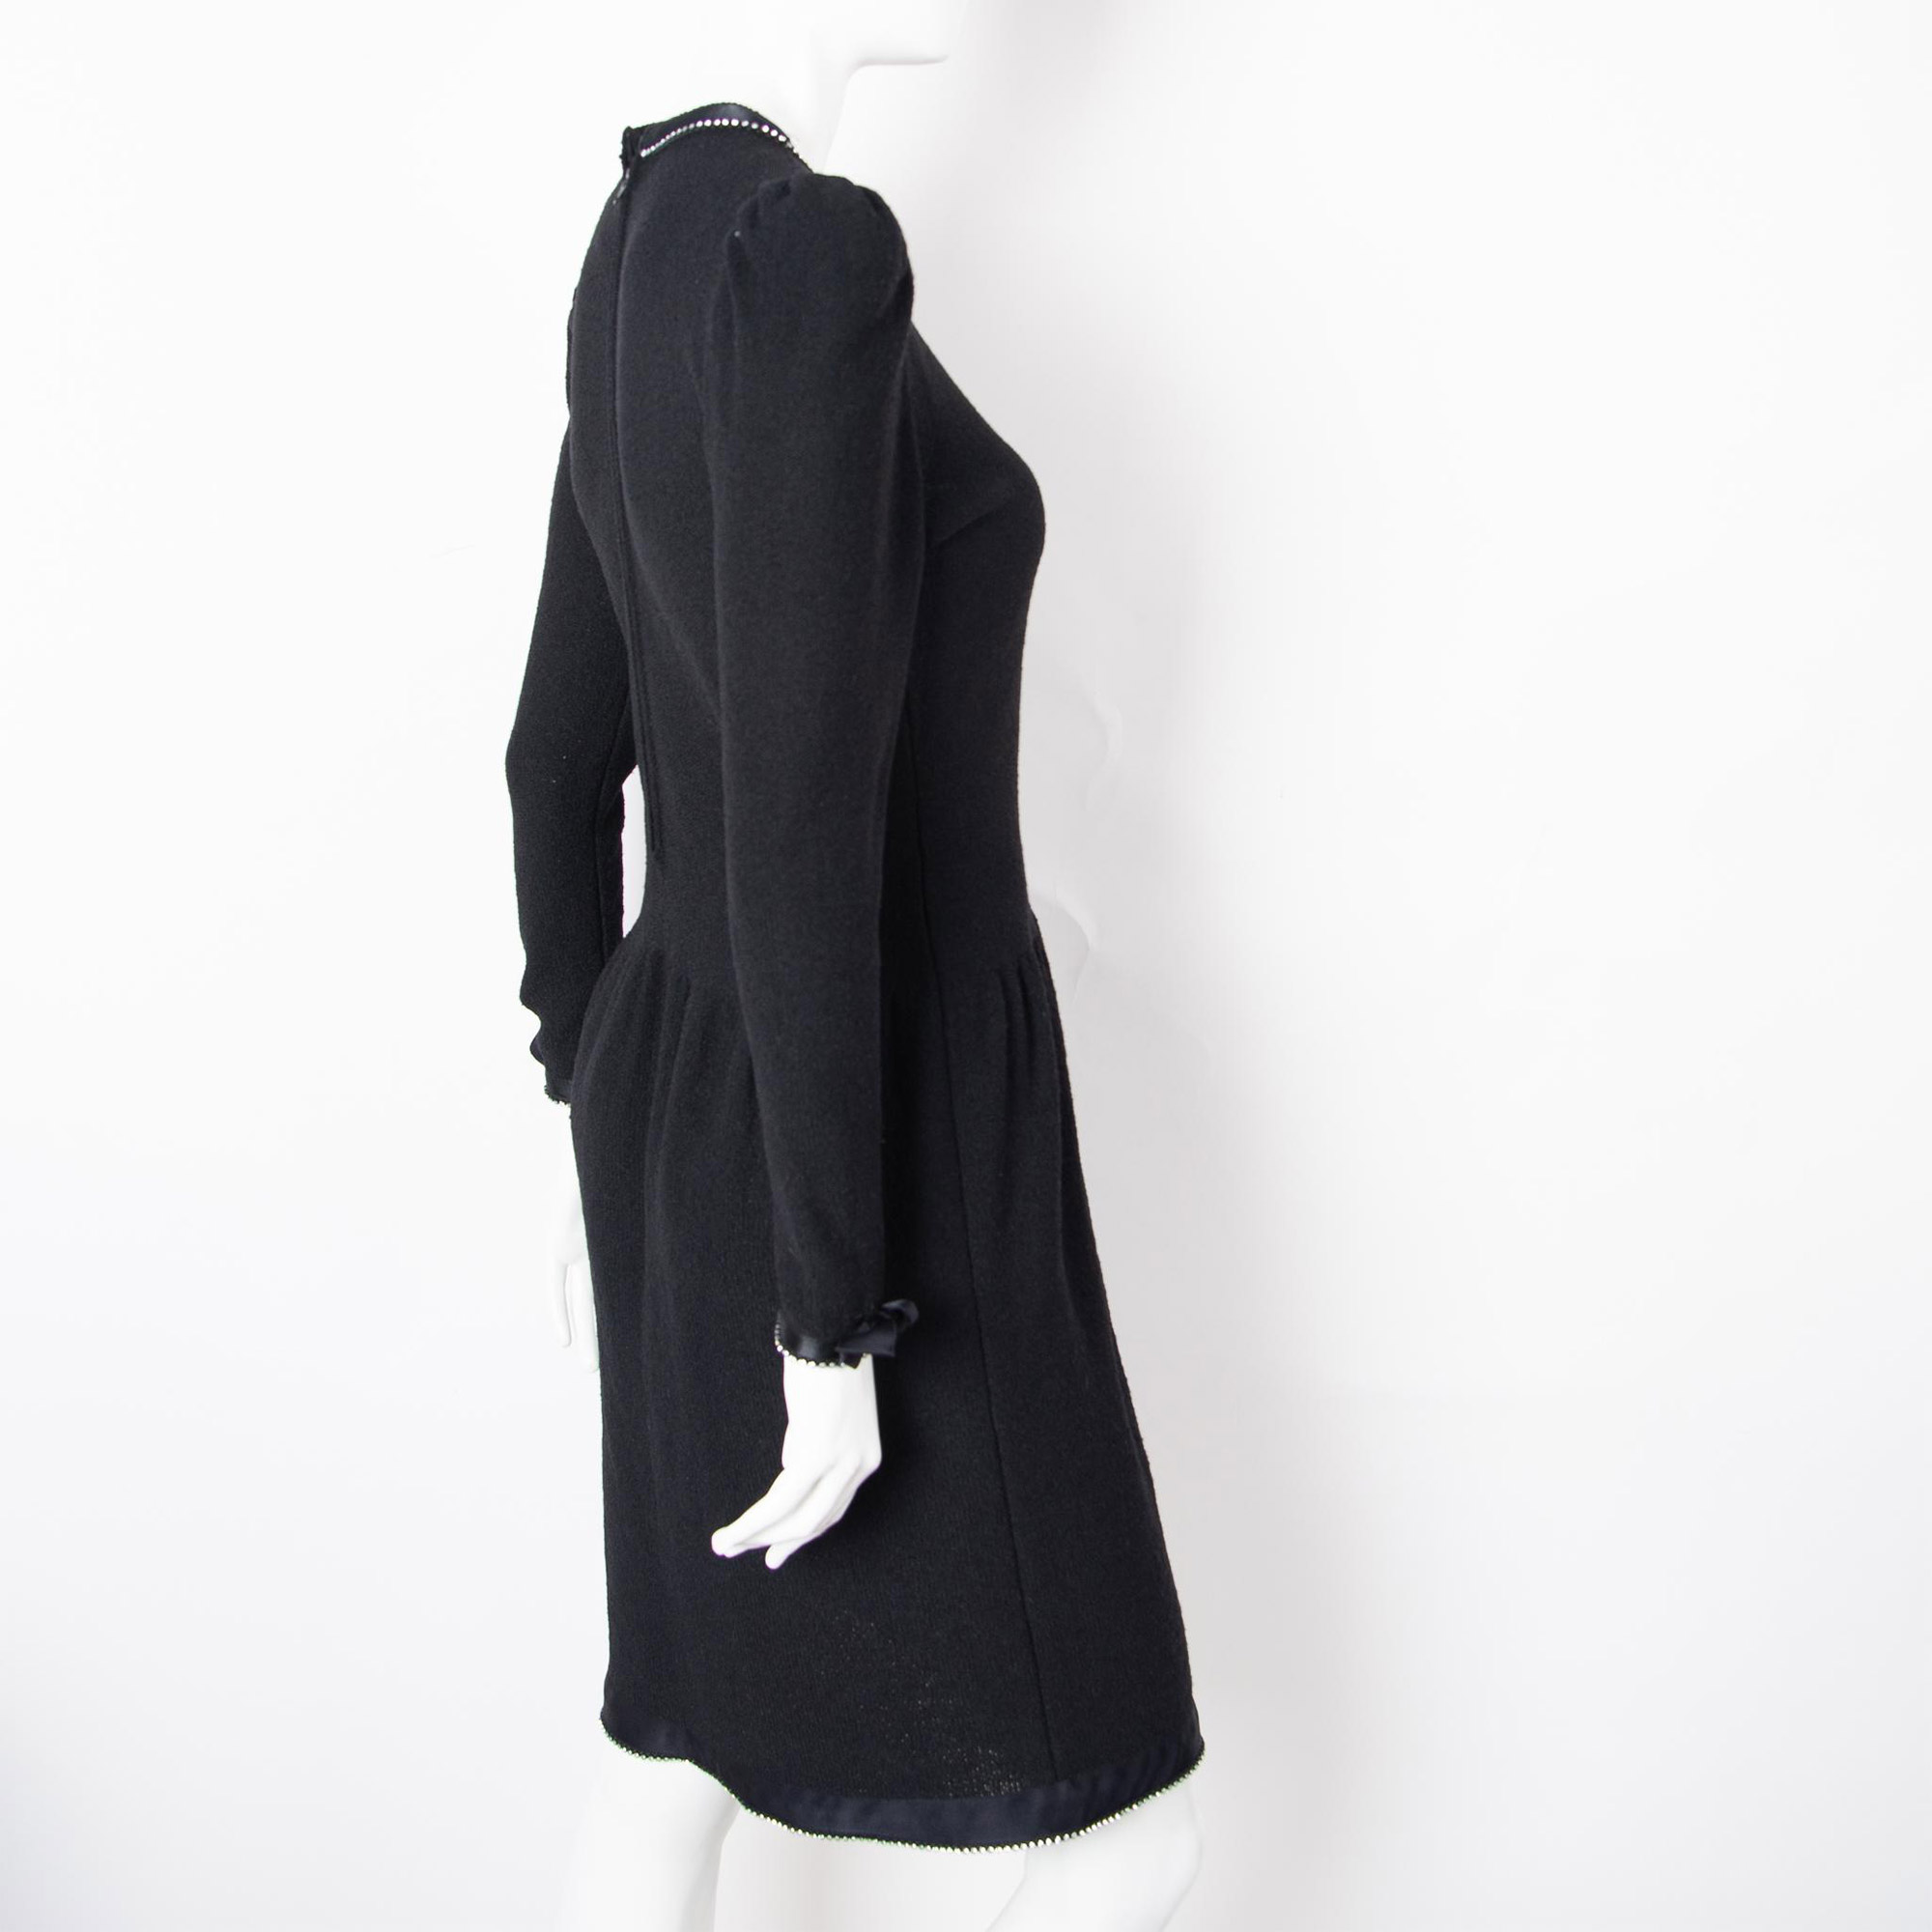 Adolfo for Neiman Marcus Rhinestone & Bow Knit Dress, Size Small - Image 5 of 8